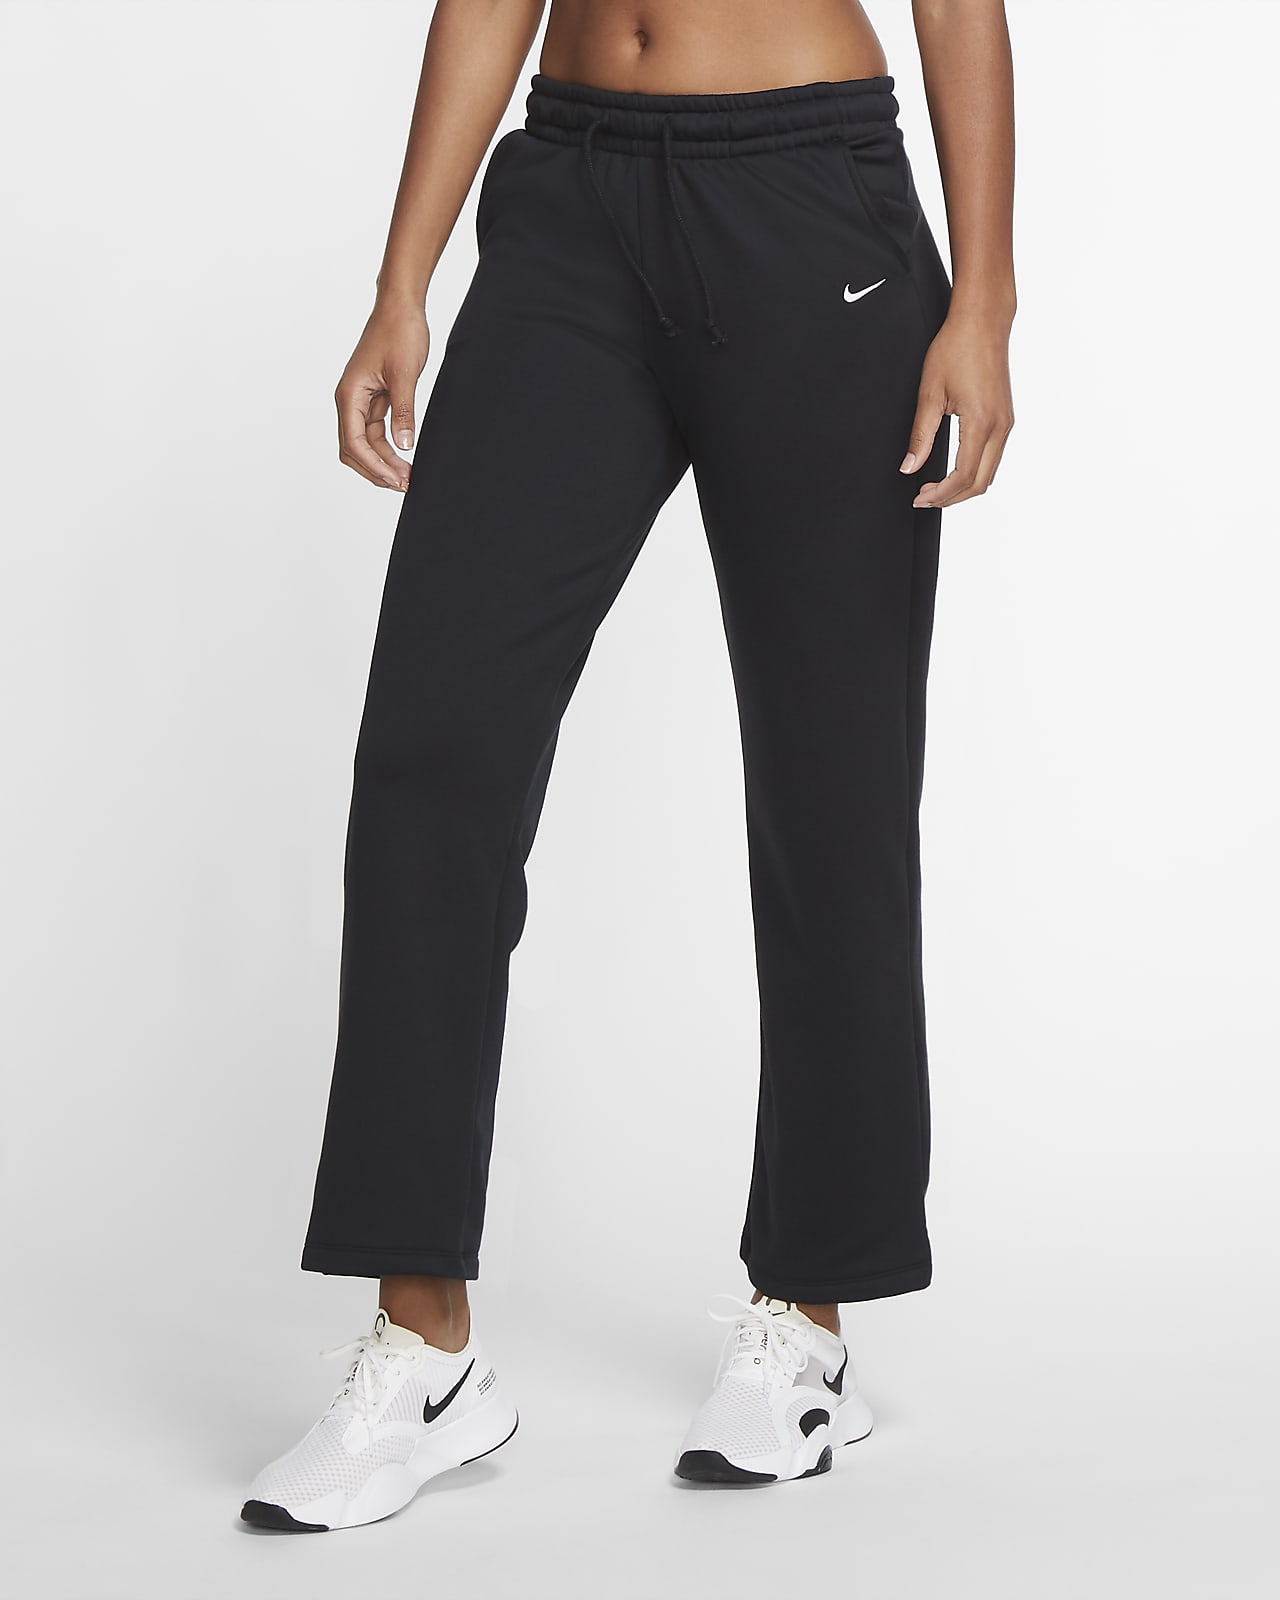 Nike Women's Training Pants. Nike.com